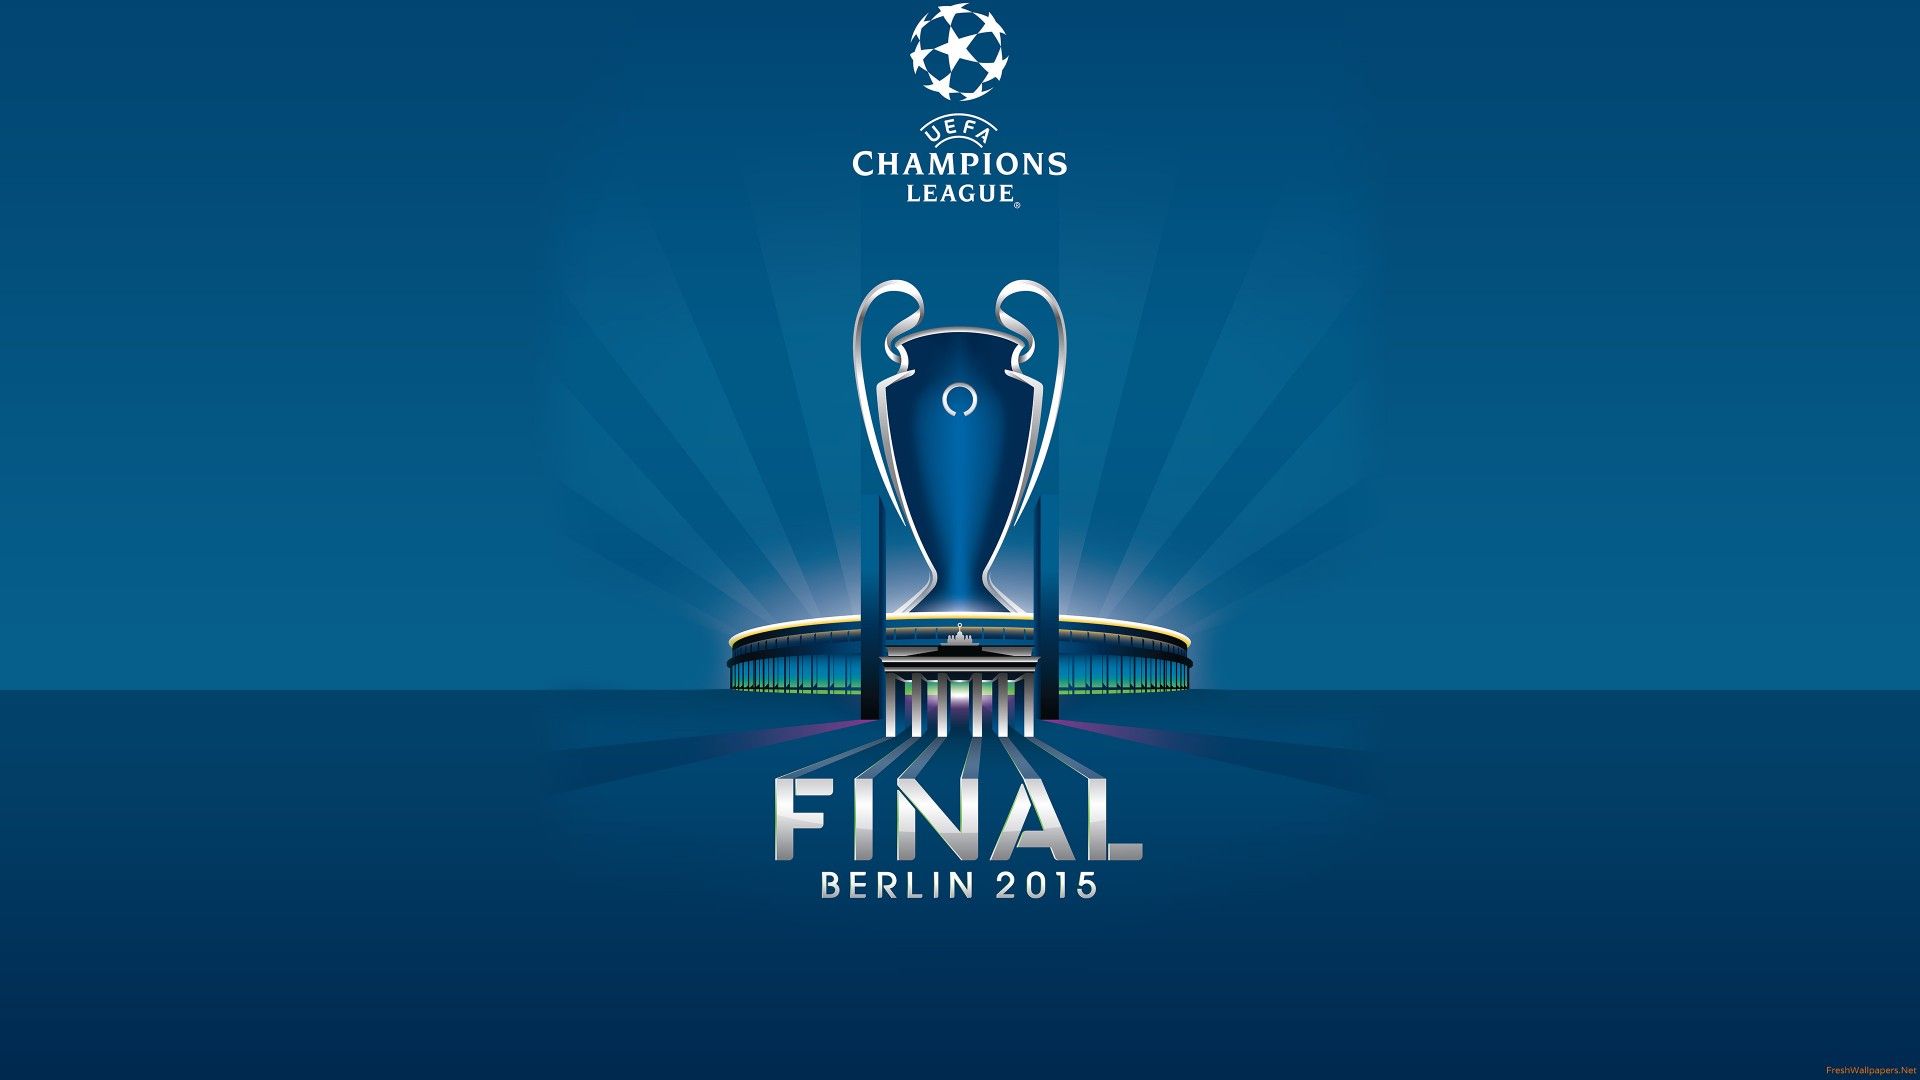 UEFA Champions League Berlin 2015 Final Logo wallpapers